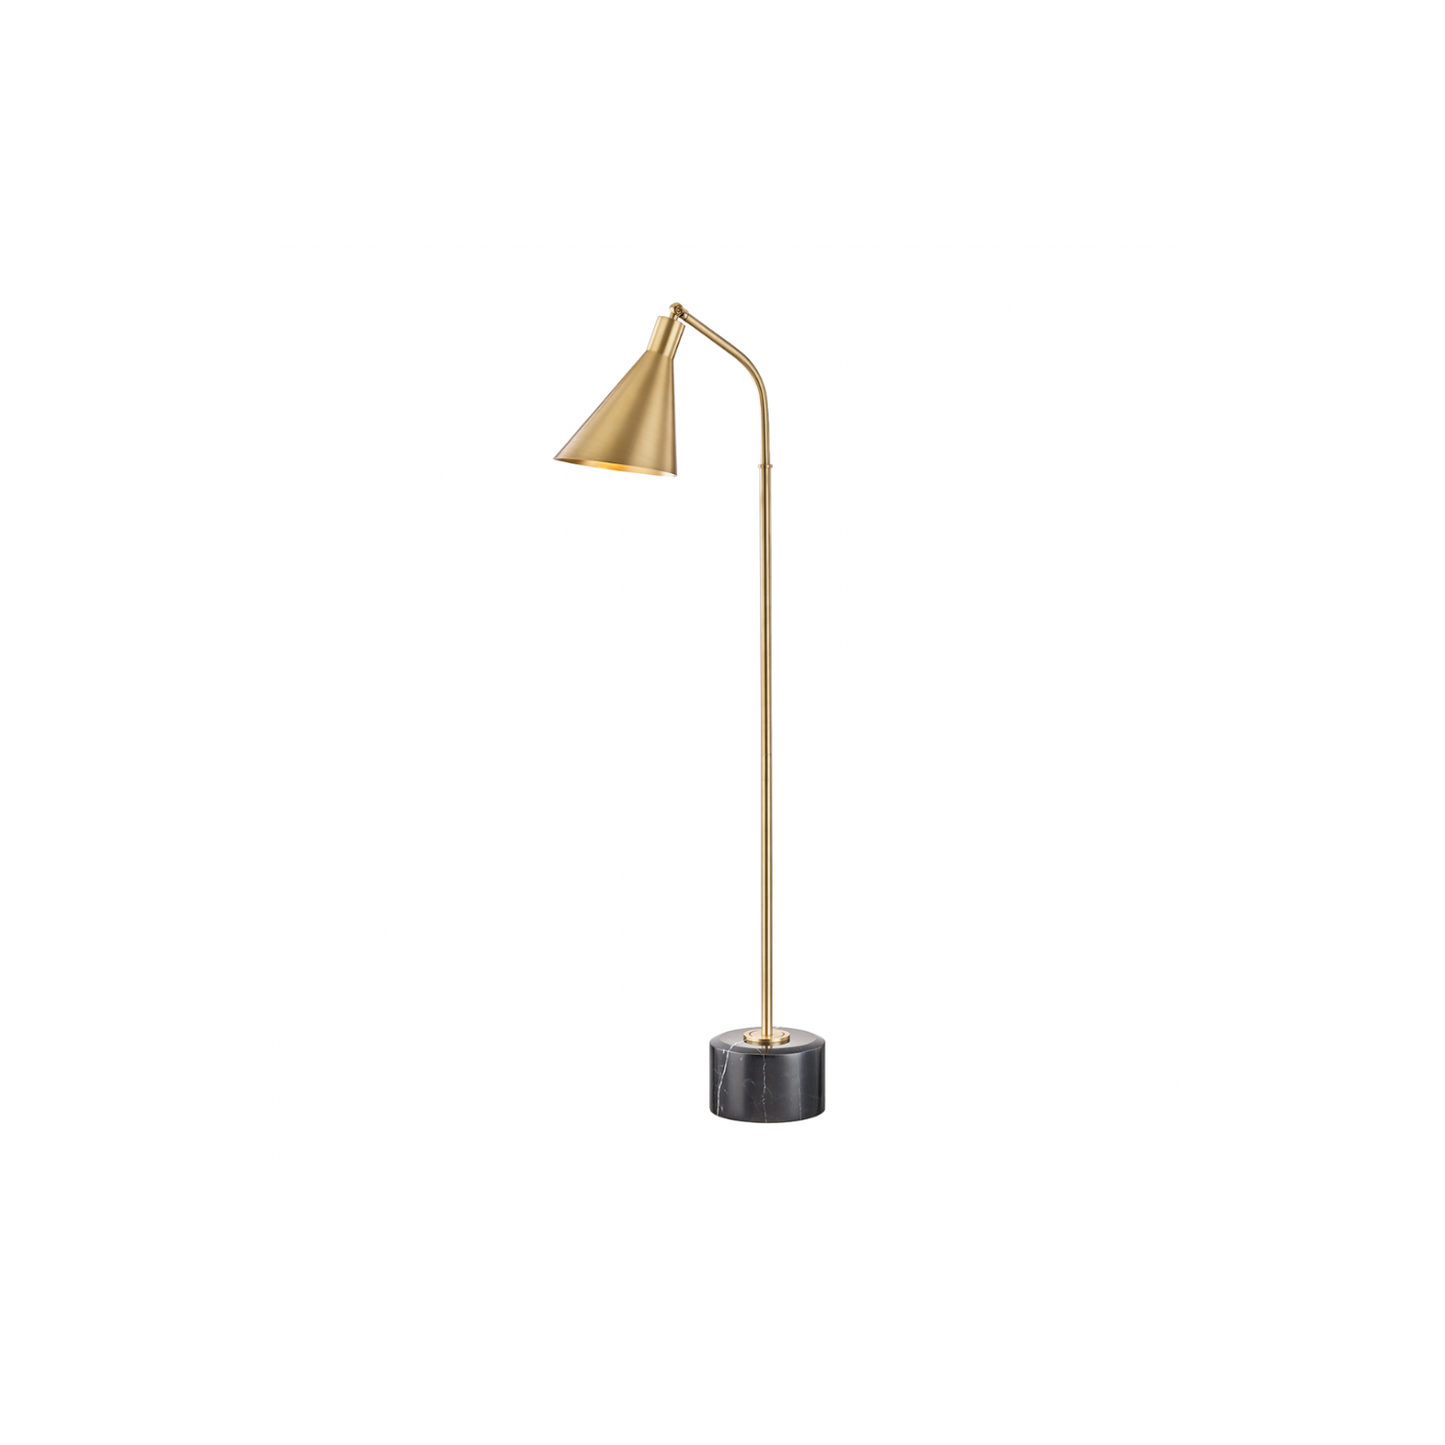 Stanton Floor Lamp - Aged Brass